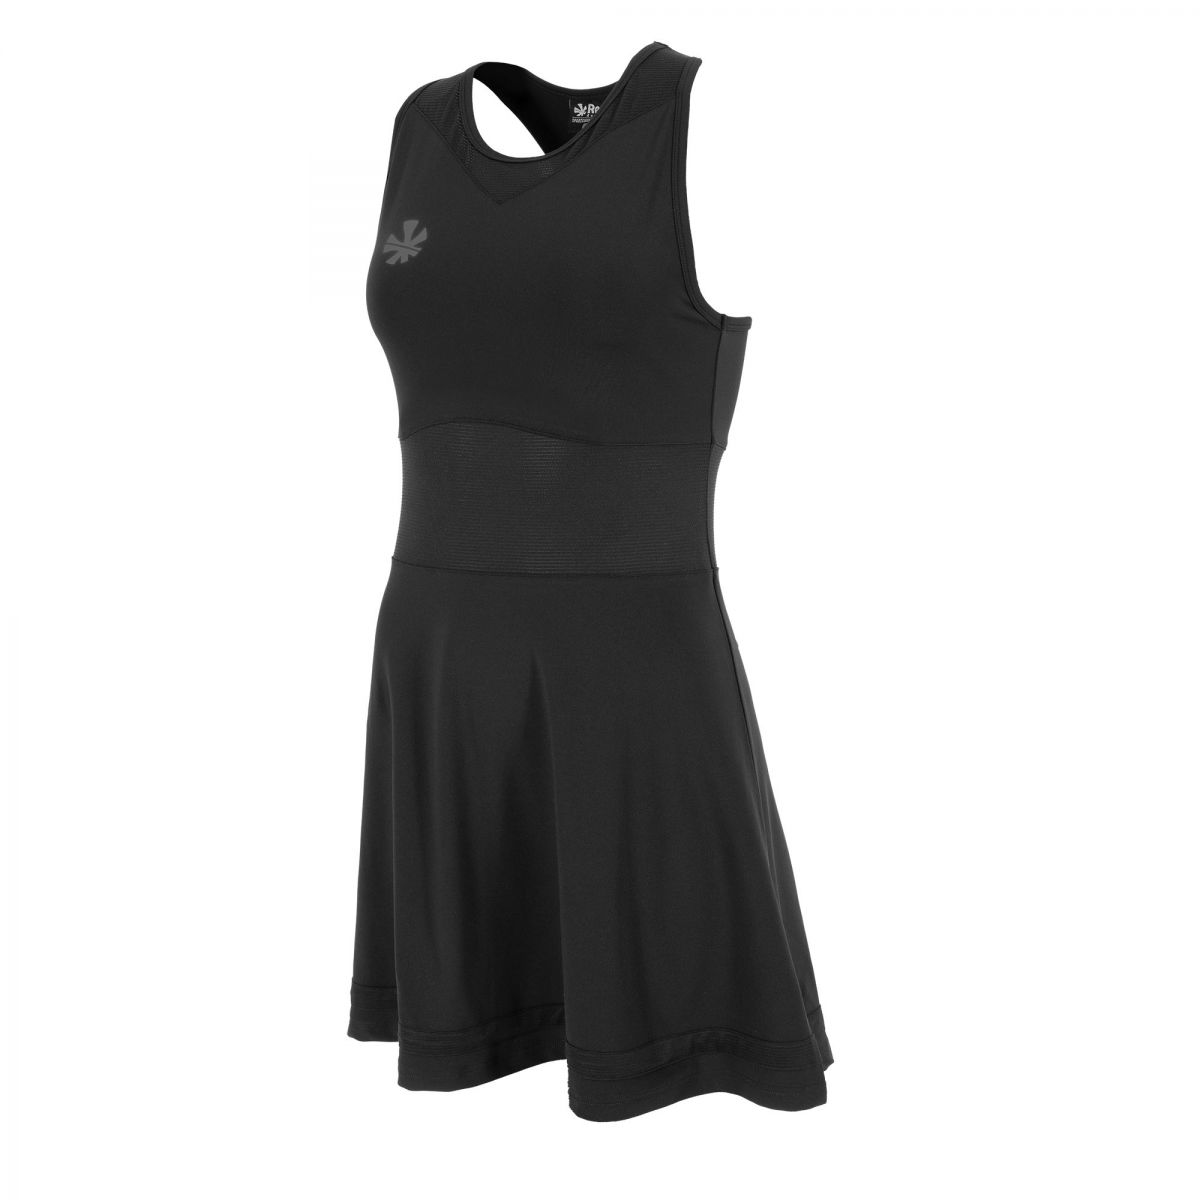 --Reece Racket Dress Ladies